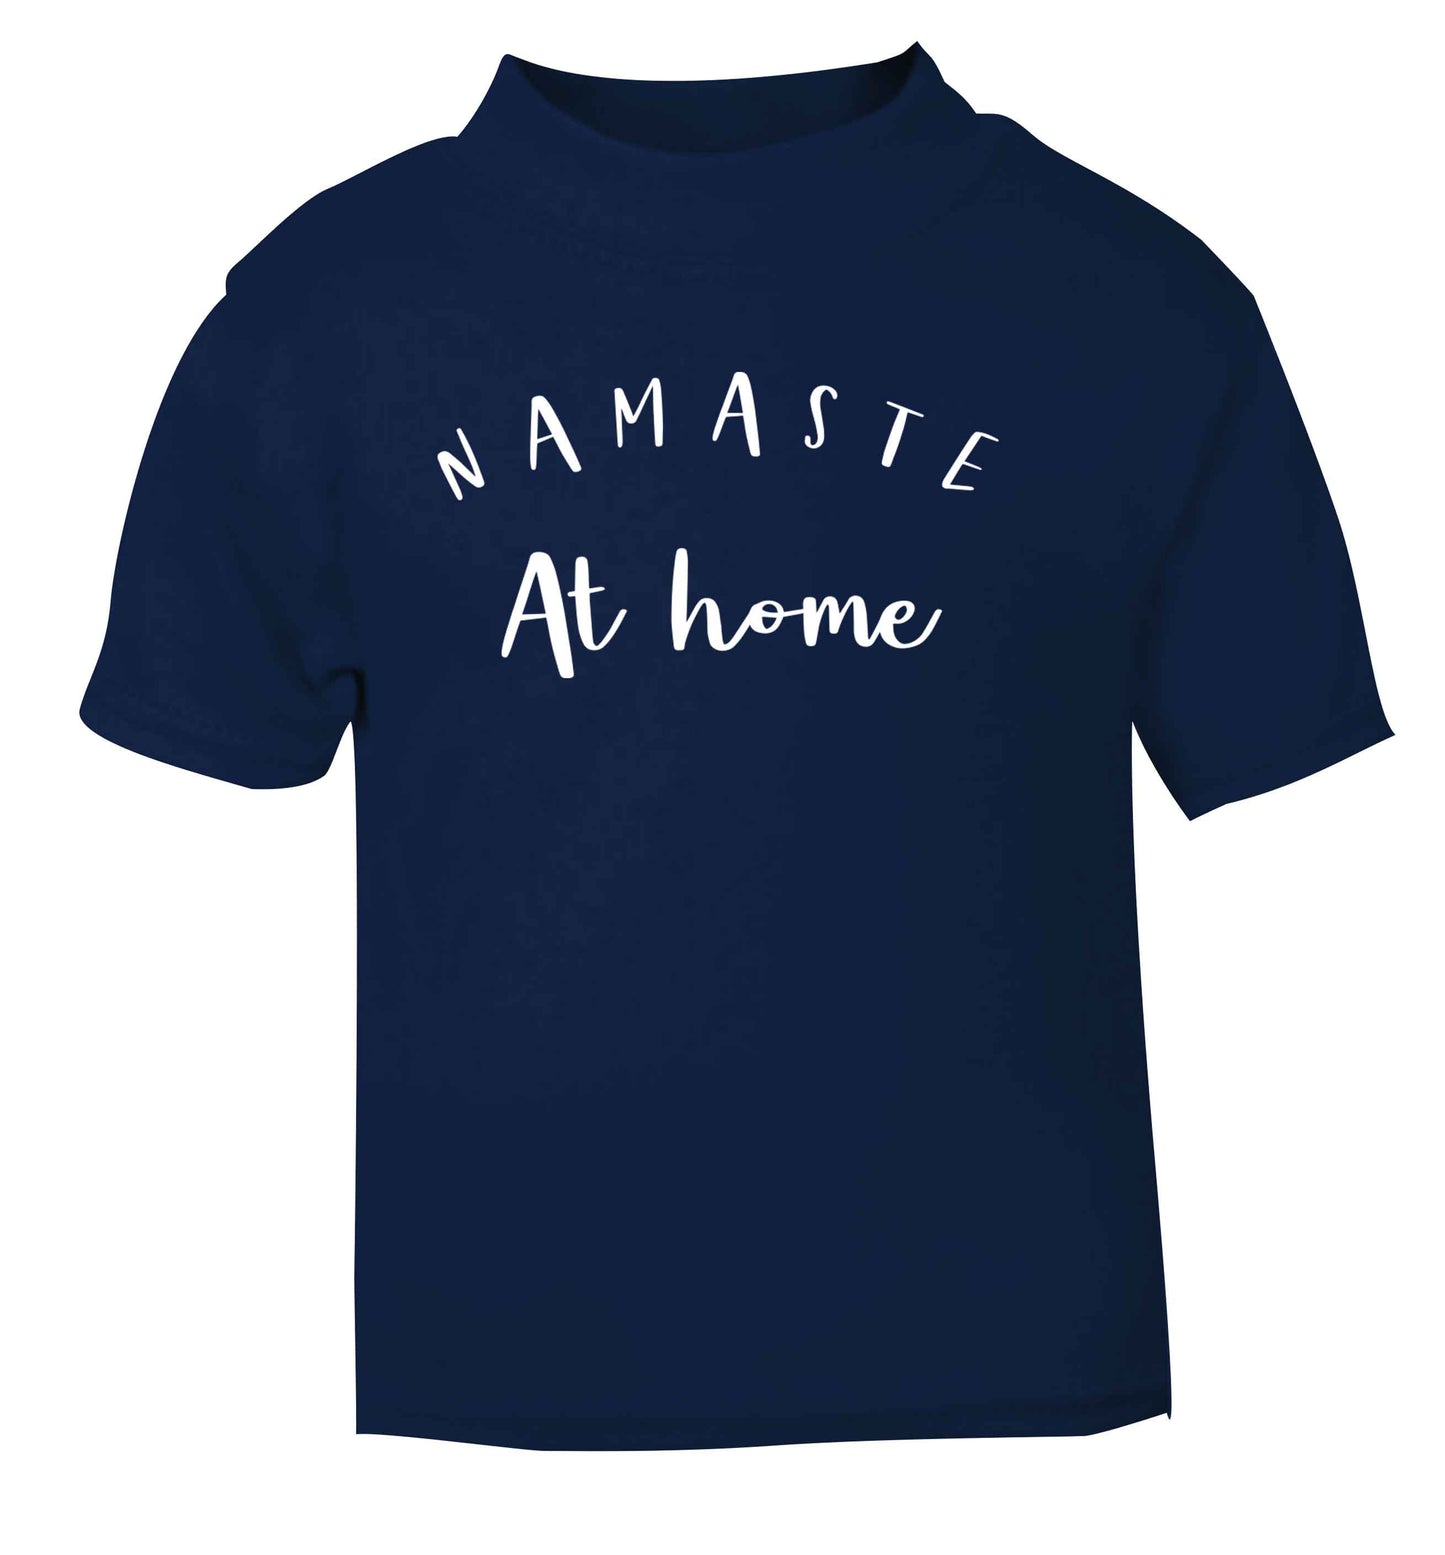 Namaste at home navy Baby Toddler Tshirt 2 Years